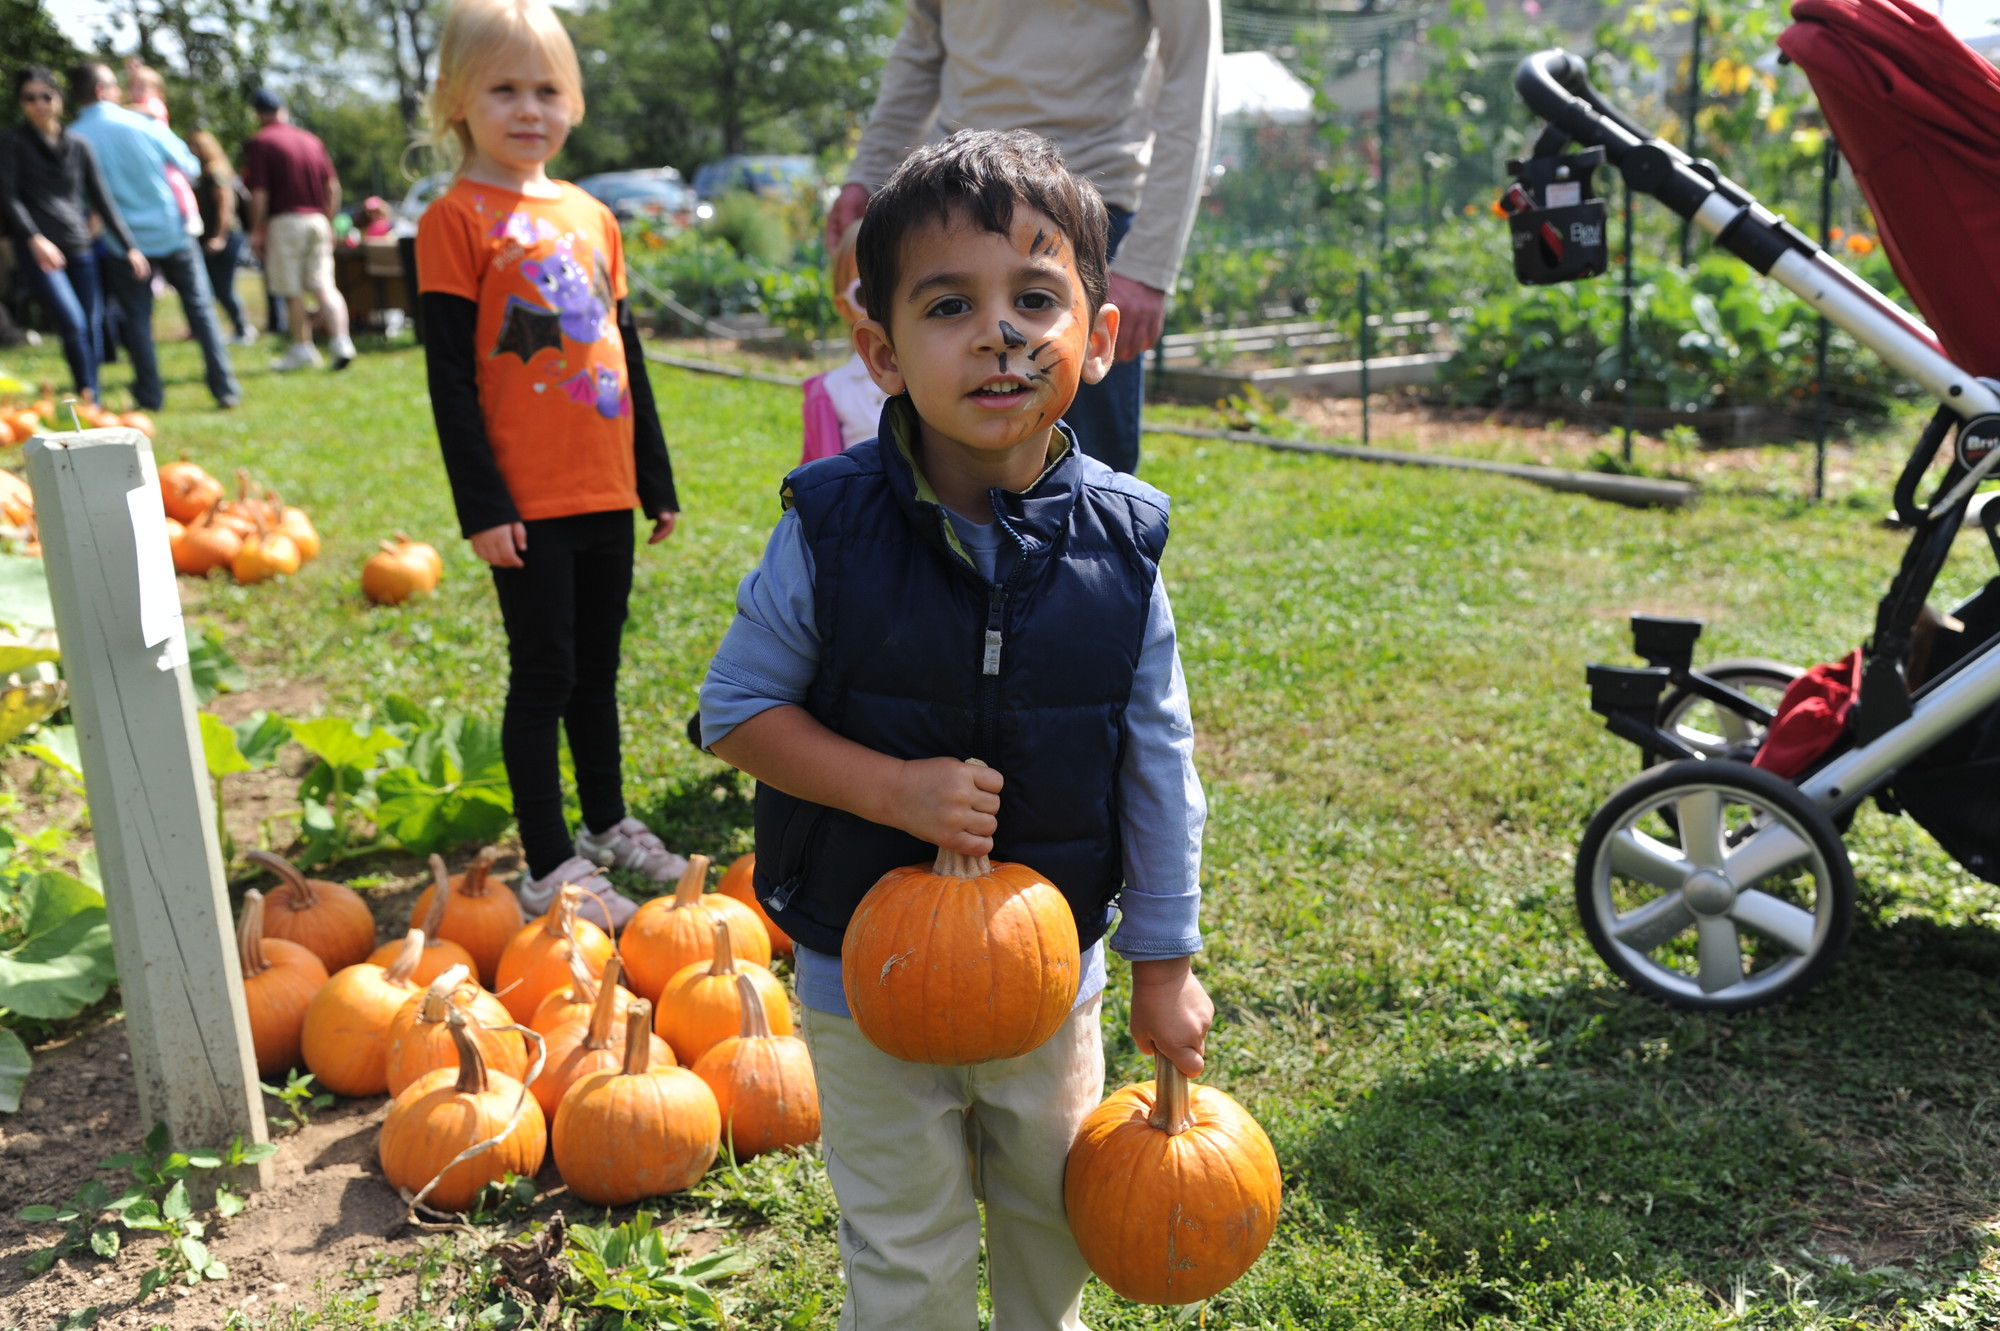 Miles Tobon, 2, a half-tiger, half-human, enjoyed some pumpkin picking at the fall festival.